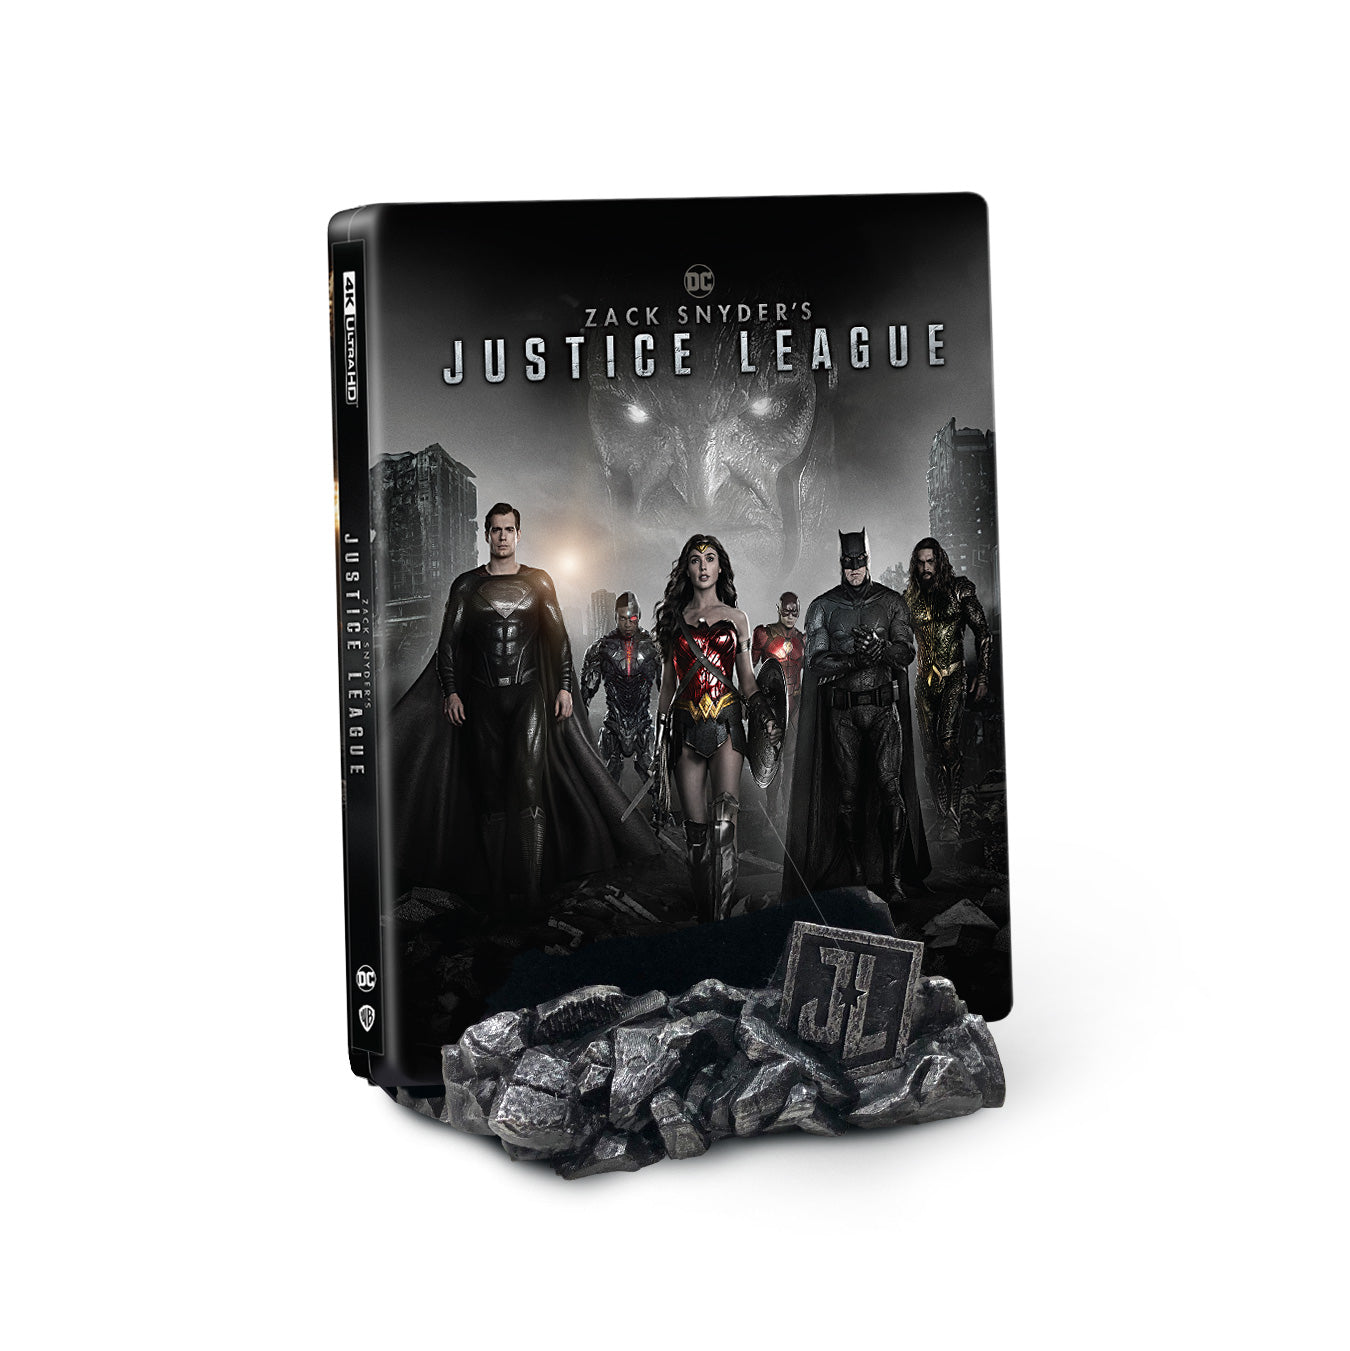 ME#39] Zack Snyder's Justice League Steelbook (Motherbox HU